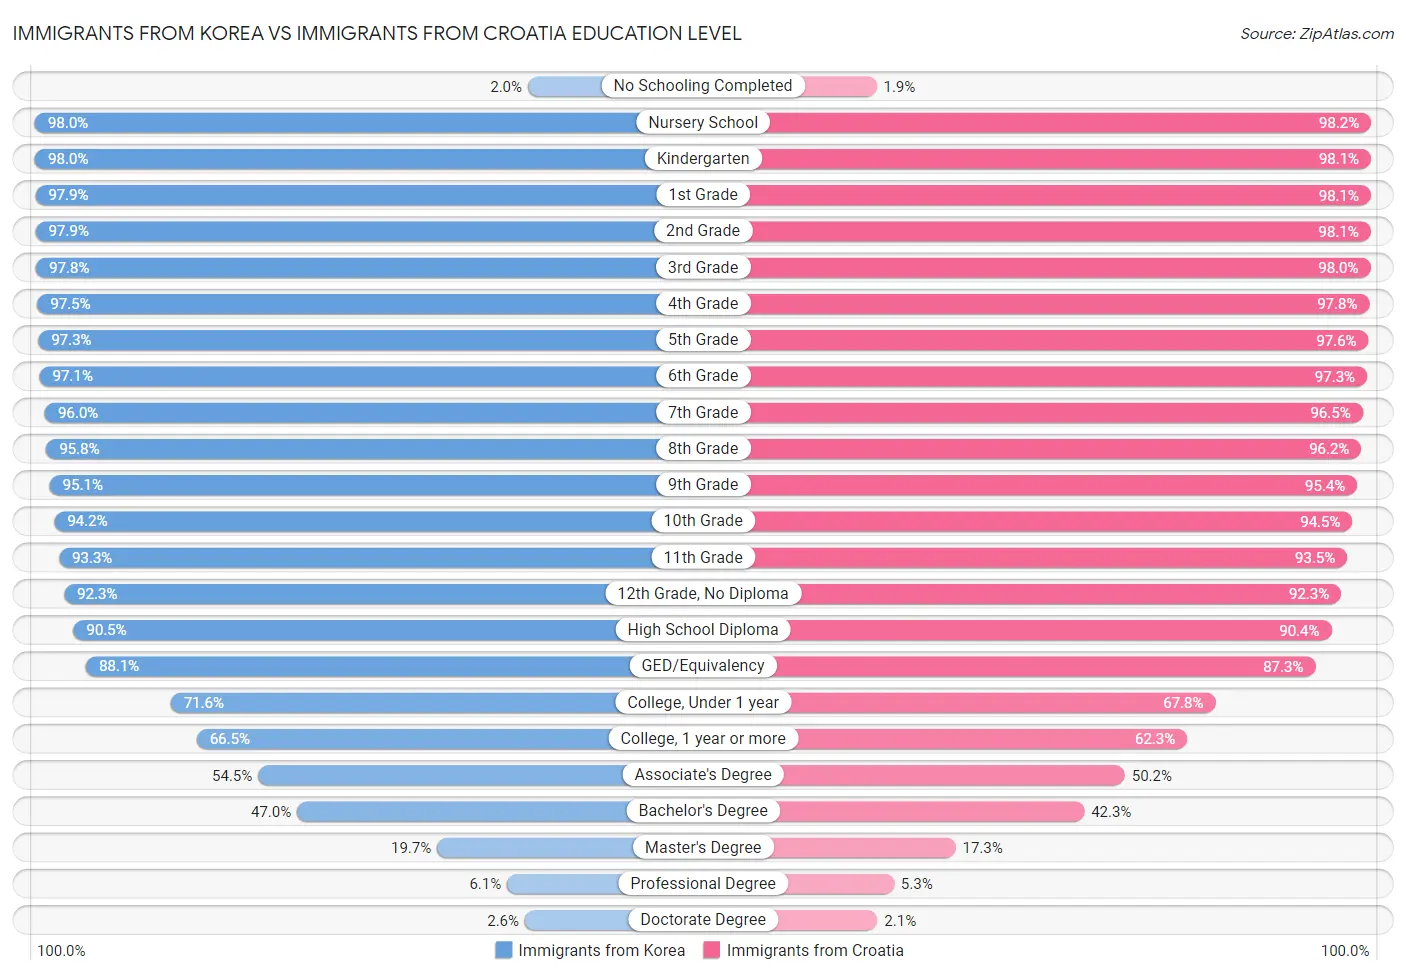 Immigrants from Korea vs Immigrants from Croatia Education Level